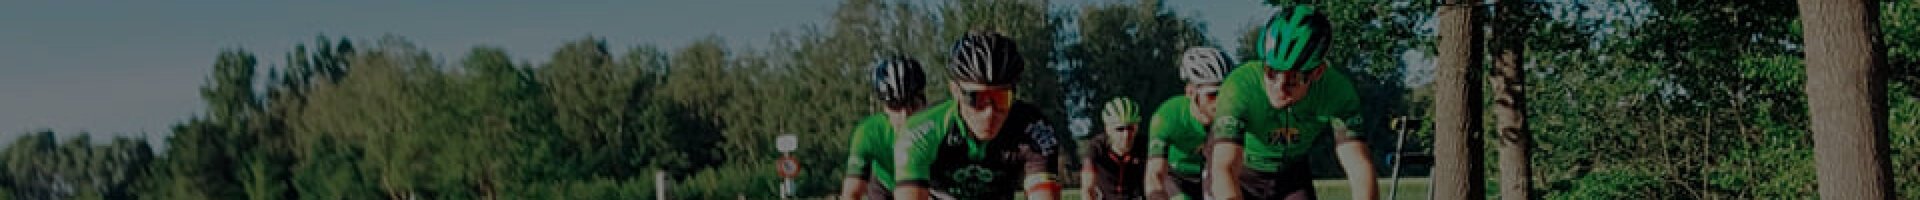 Training Team Kempen cycling